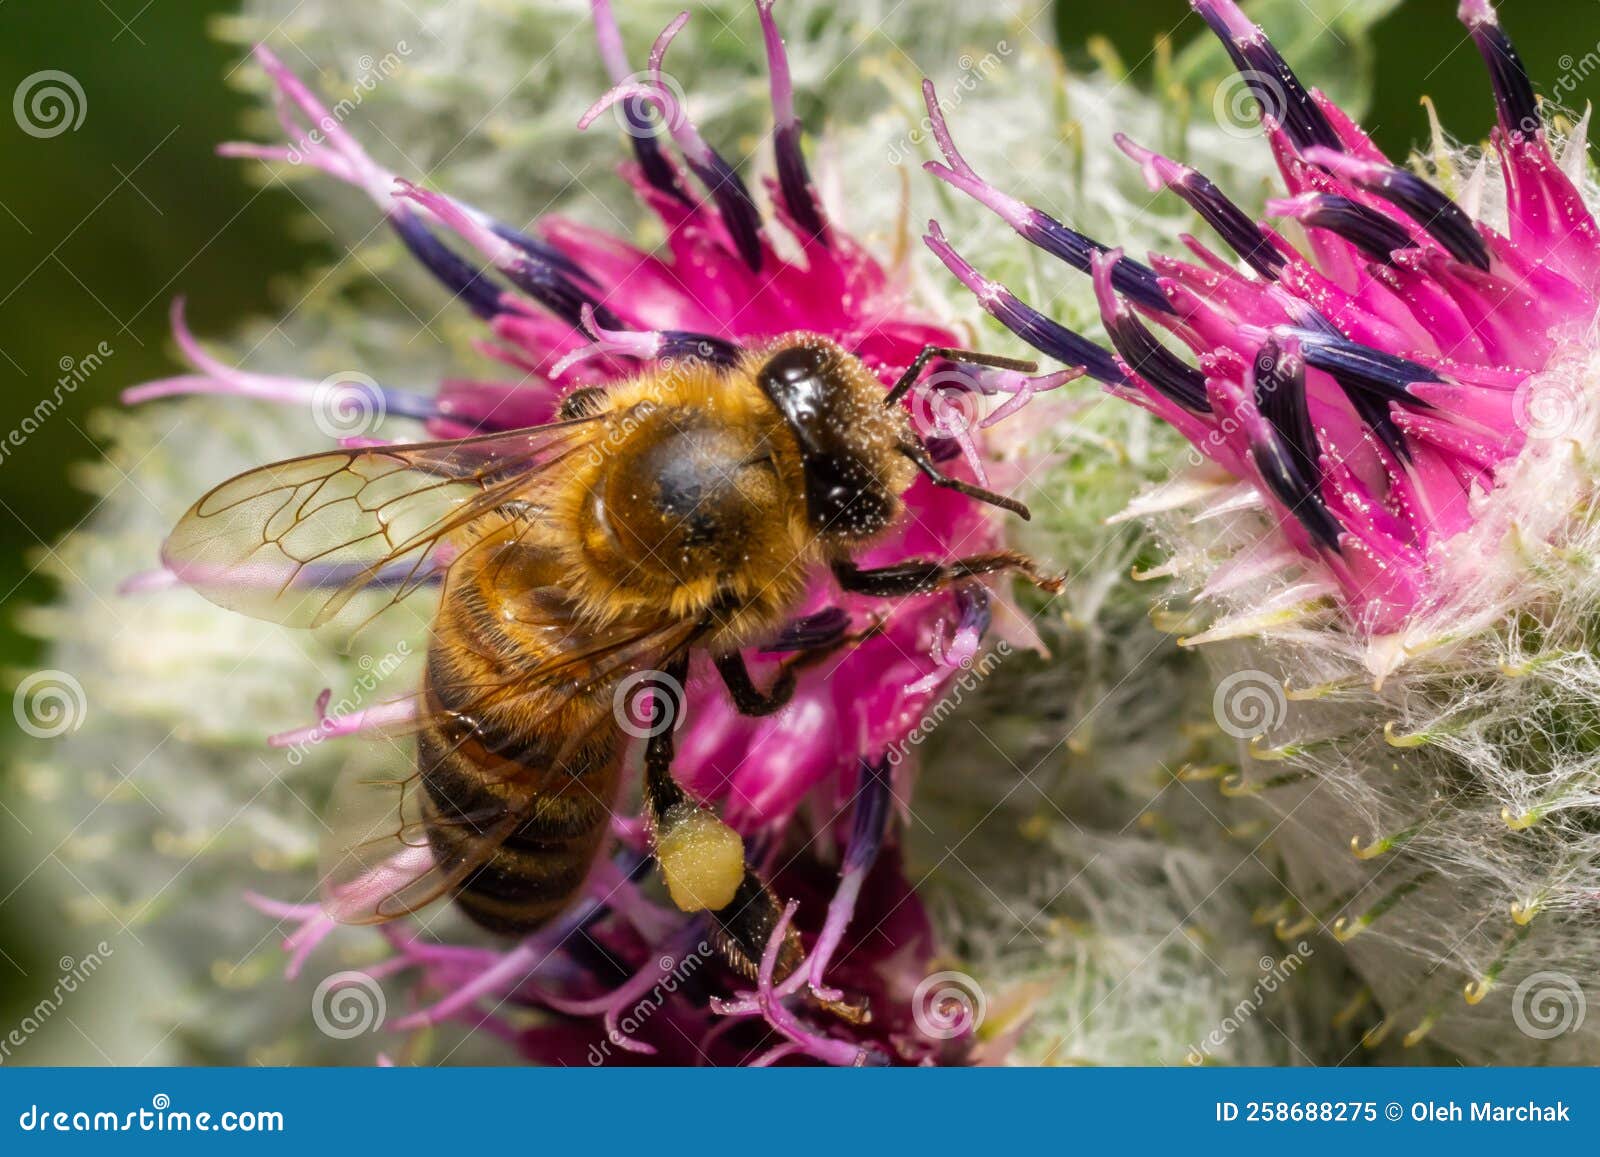 bee colecting polen from a greater burdock arctium lappa flower closeup